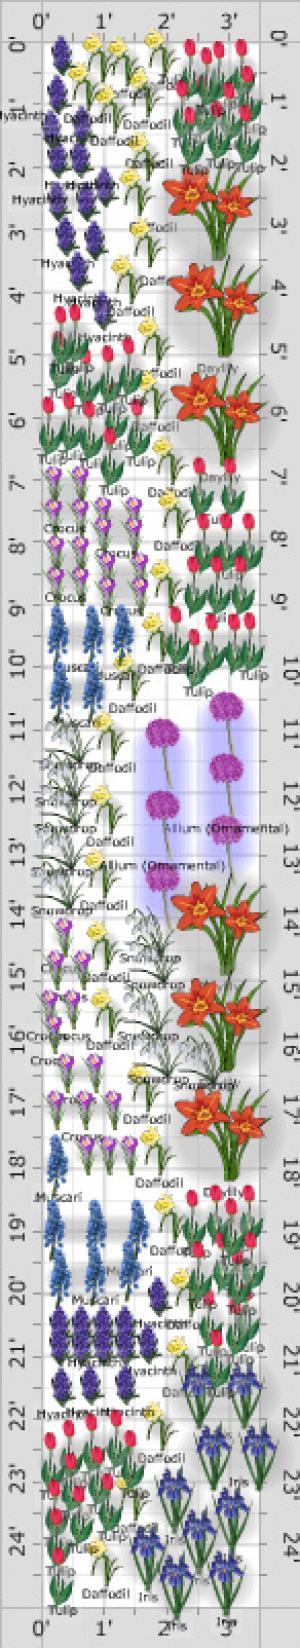 Flower Garden Plans Layouts The Old Farmer S Almanac - How To Plan A Flower Garden Layout